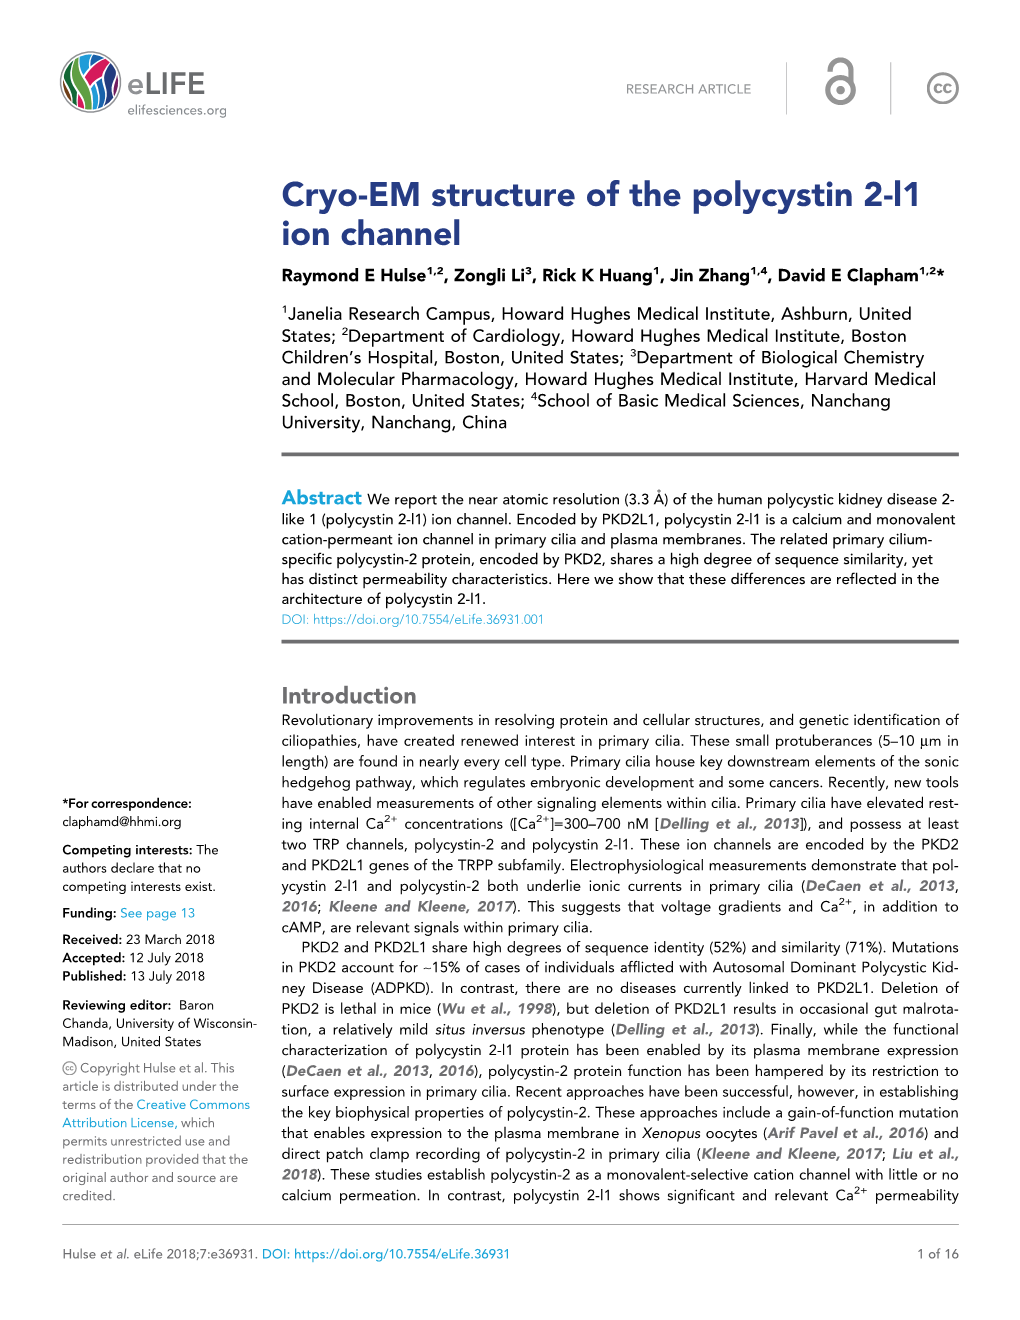 Cryo-EM Structure of the Polycystin 2-L1 Ion Channel Raymond E Hulse1,2, Zongli Li3, Rick K Huang1, Jin Zhang1,4, David E Clapham1,2*